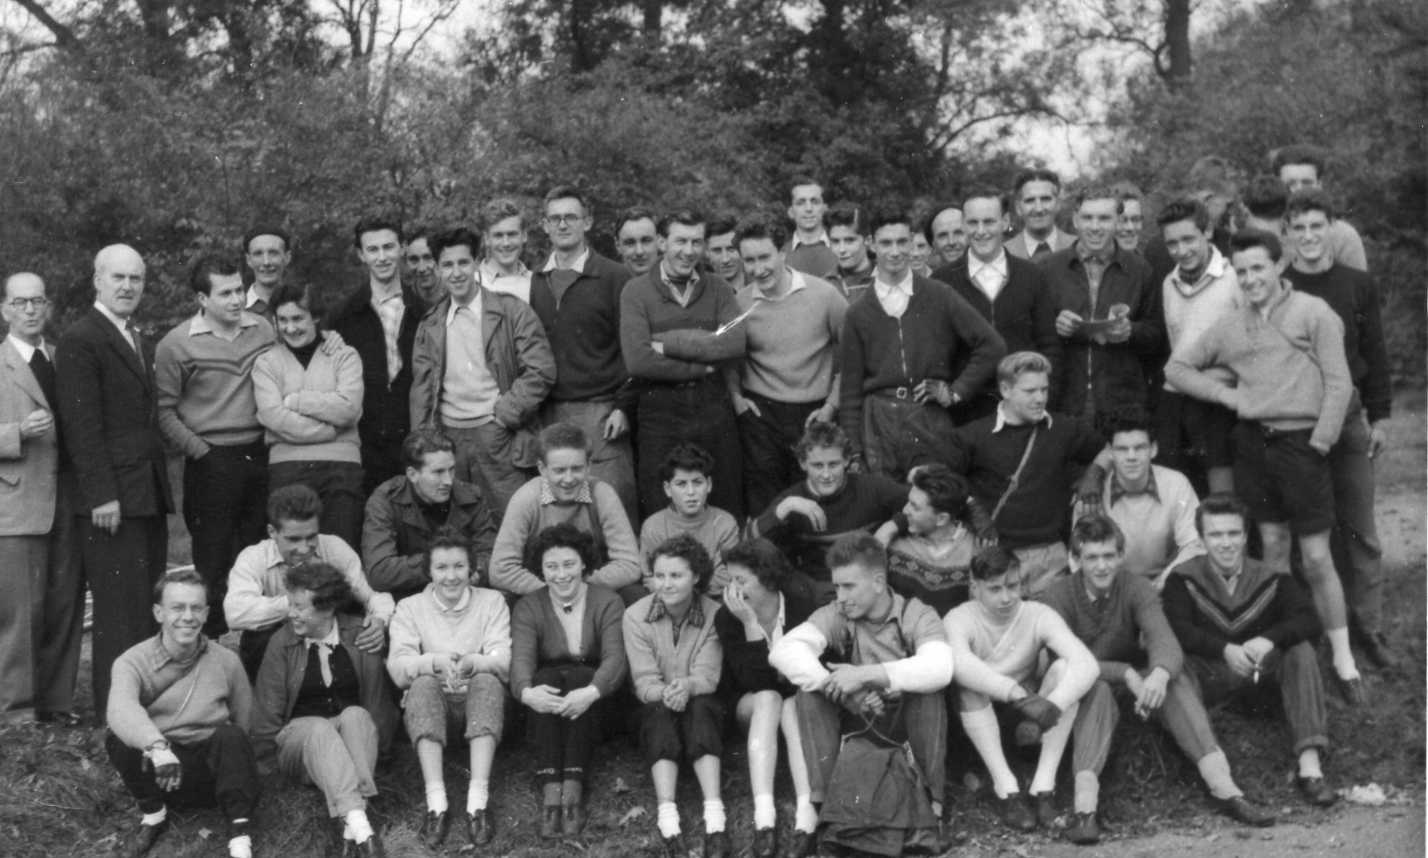 Club members 1955